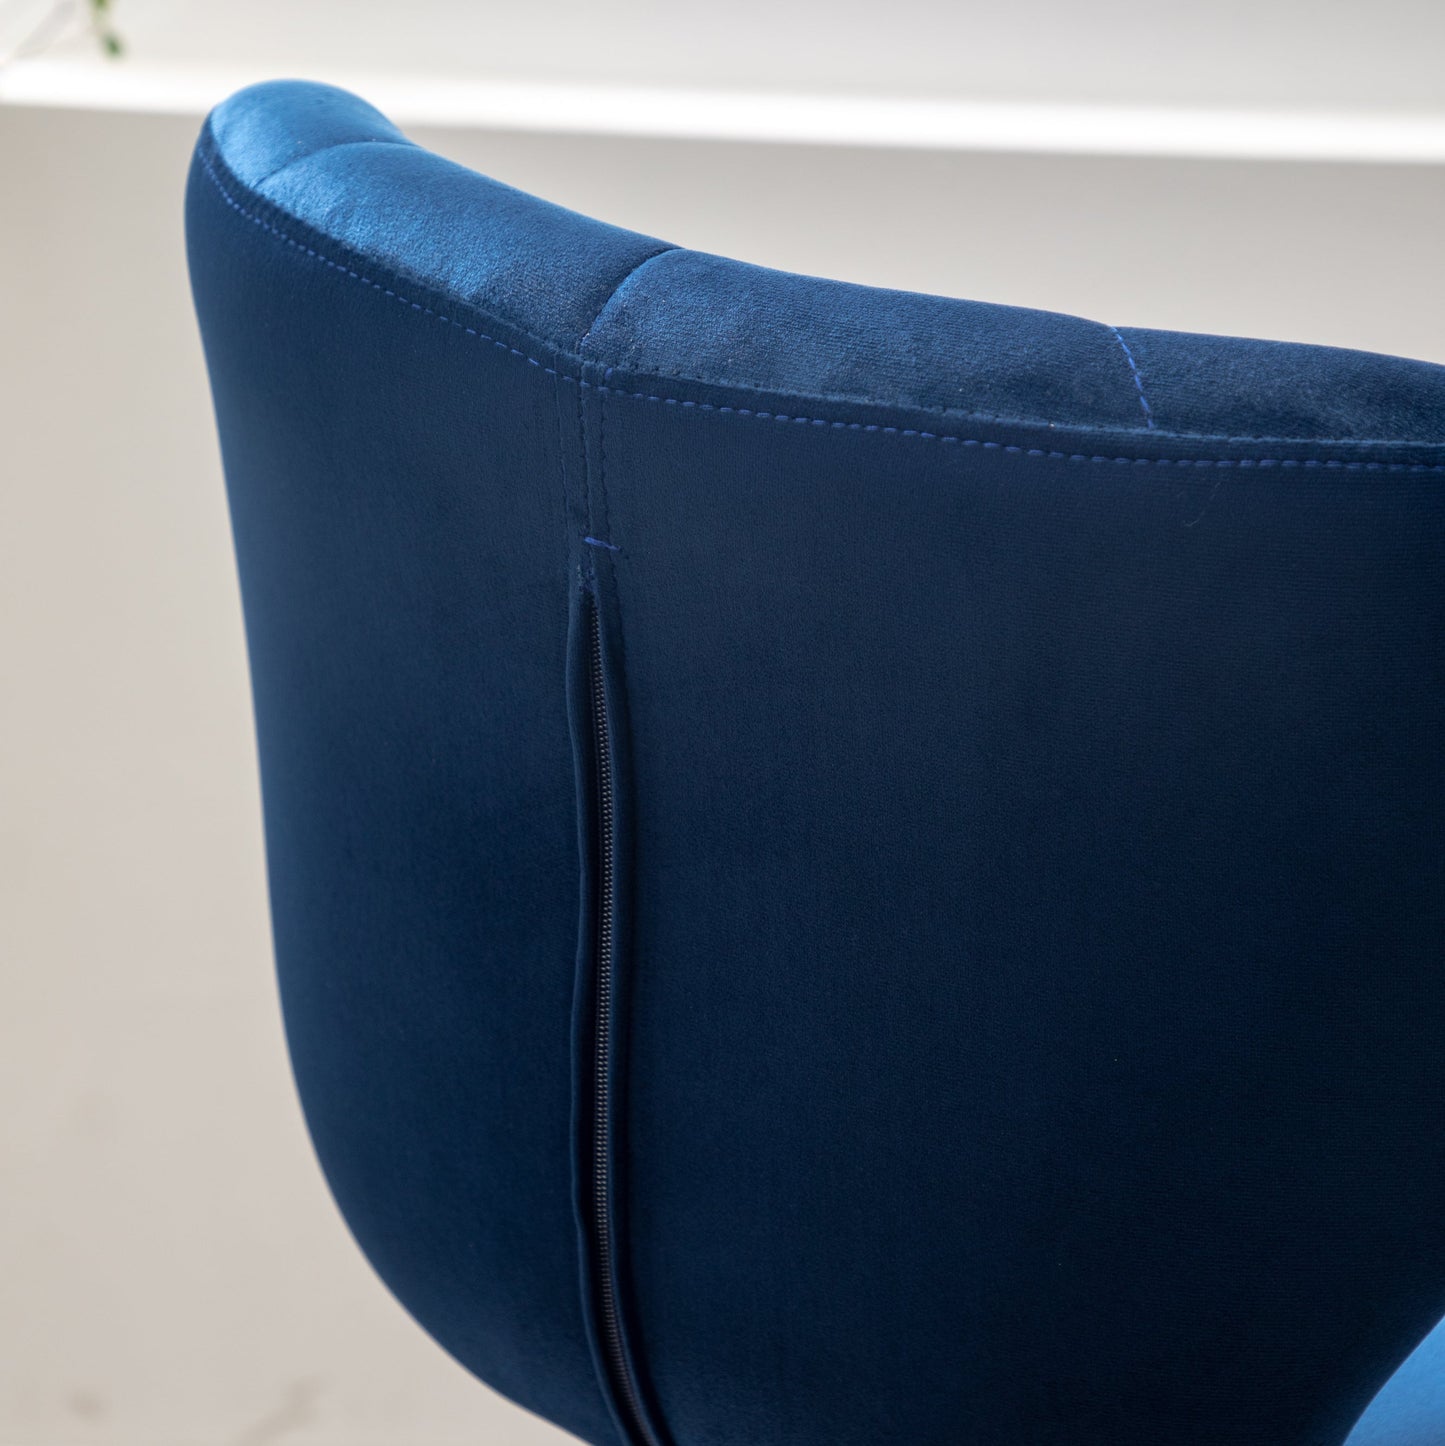 Ellston Upholstered Adjustable Swivel Barstools in Blue, Set of 2